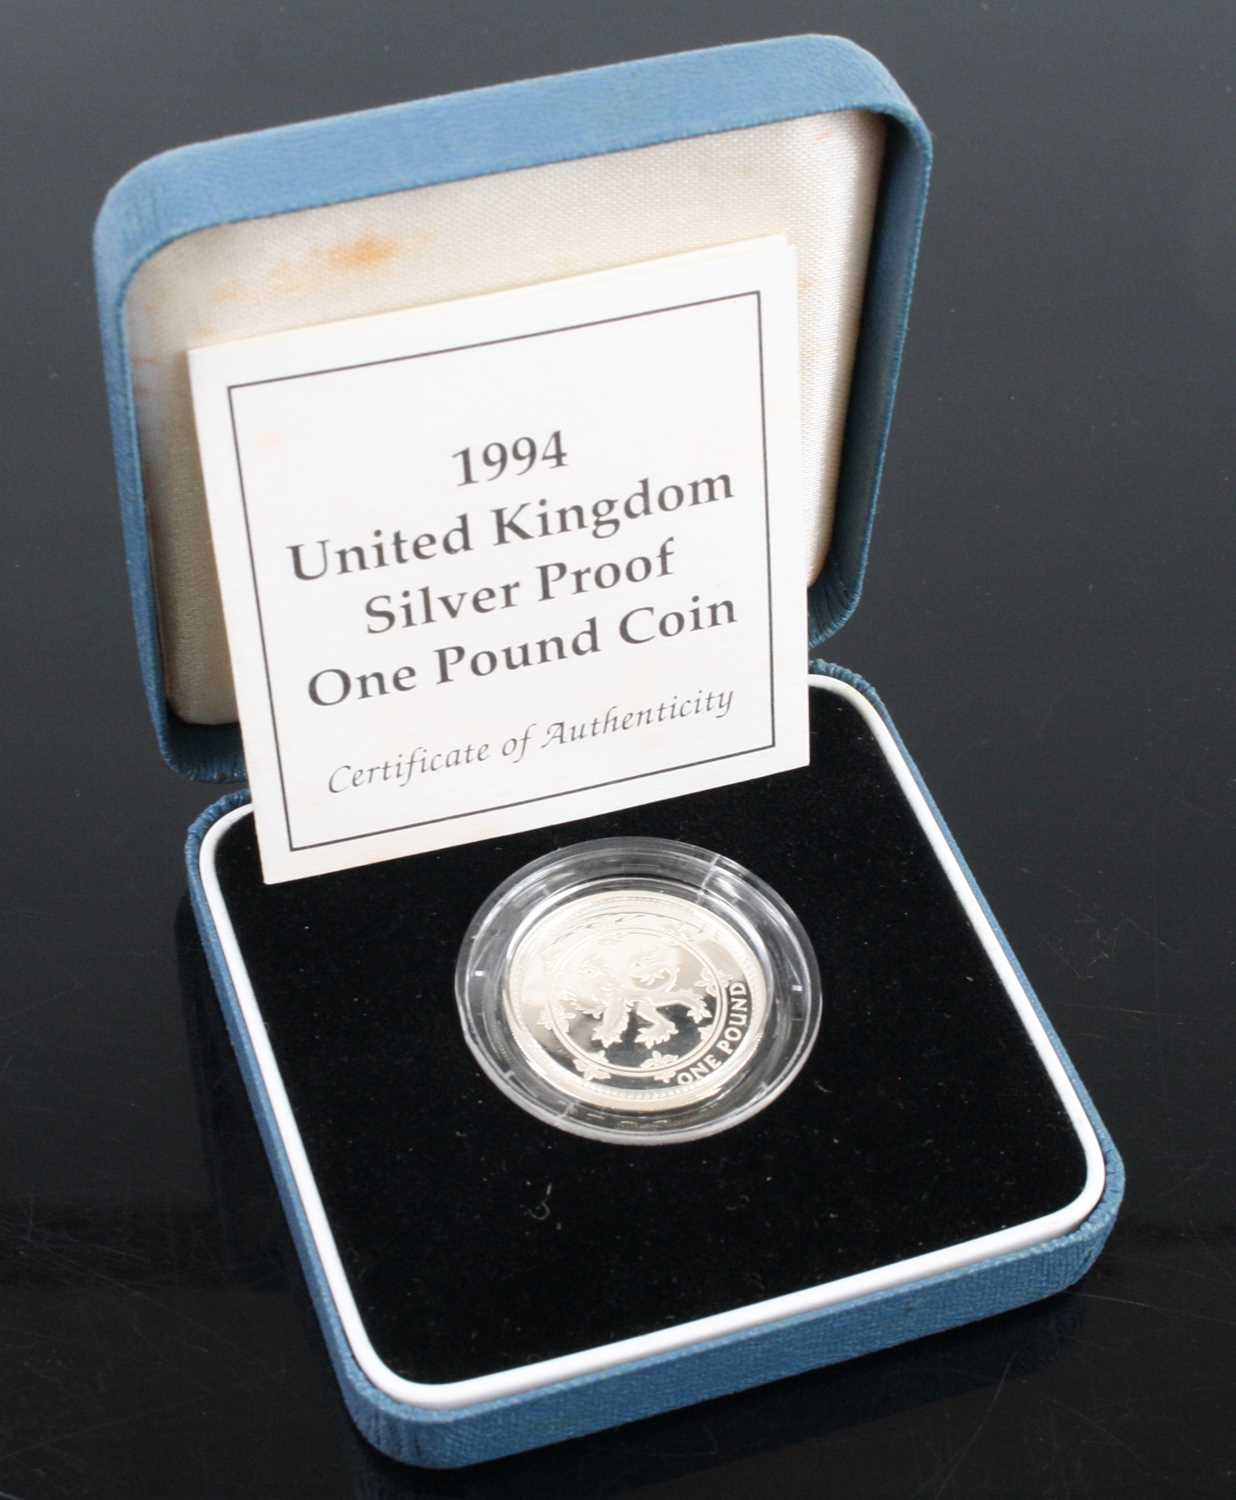 United Kingdom, 1994 Silver Proof One Pound Coin, Elizabeth II, rev: Scottish lion above